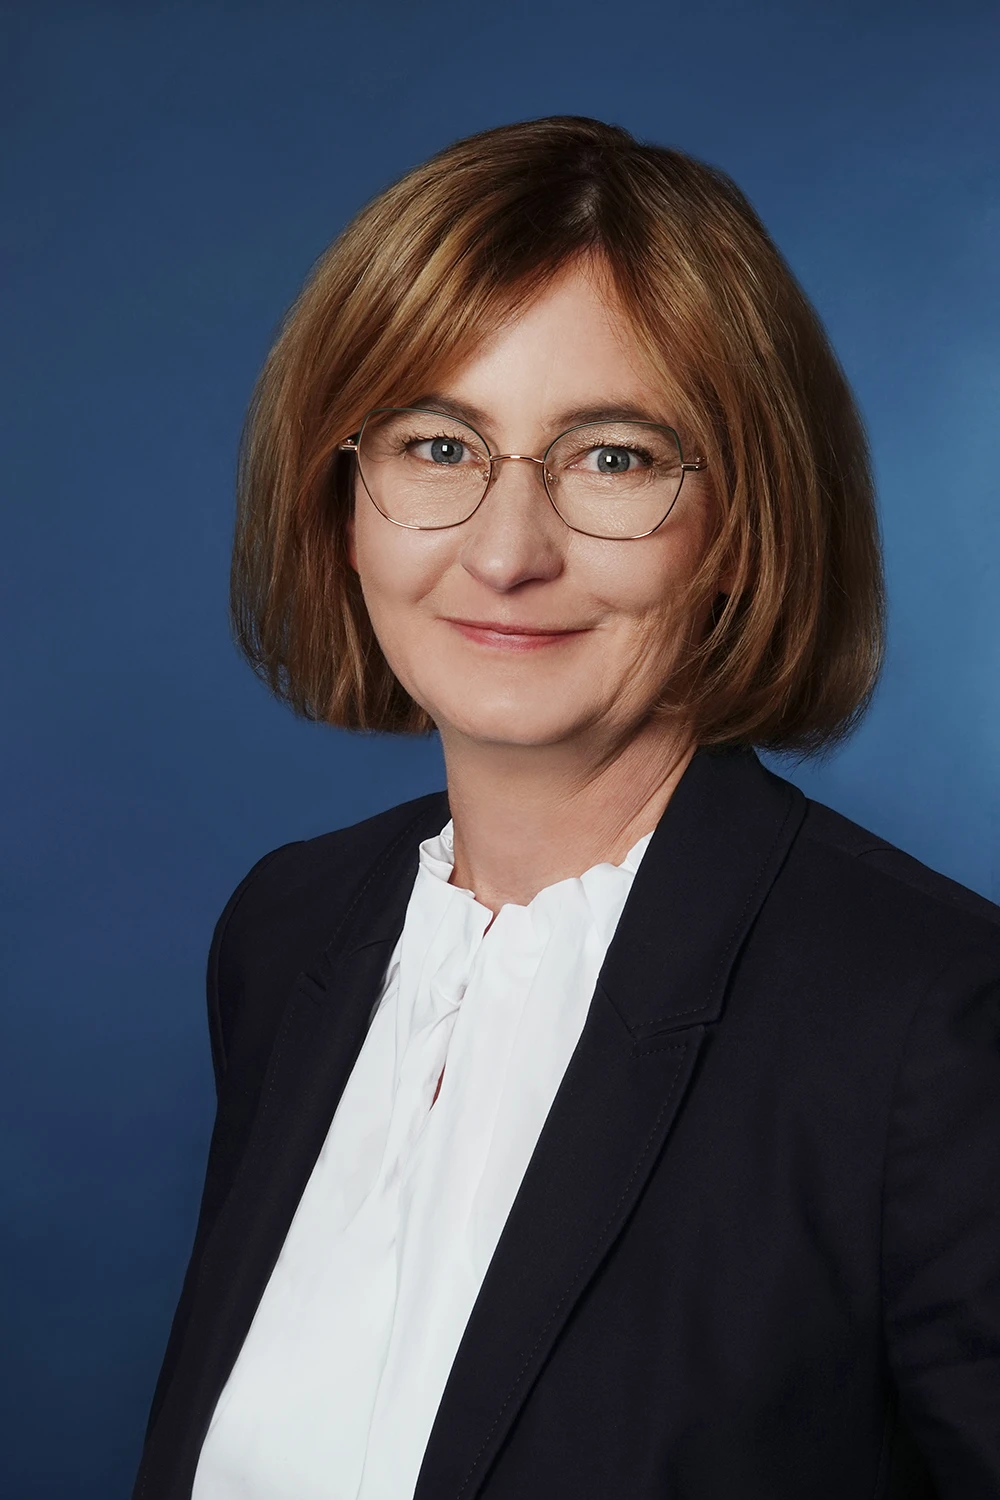 Iris Rolfes Patzelt Portraitfoto - Rechtsanwaltskanzlei